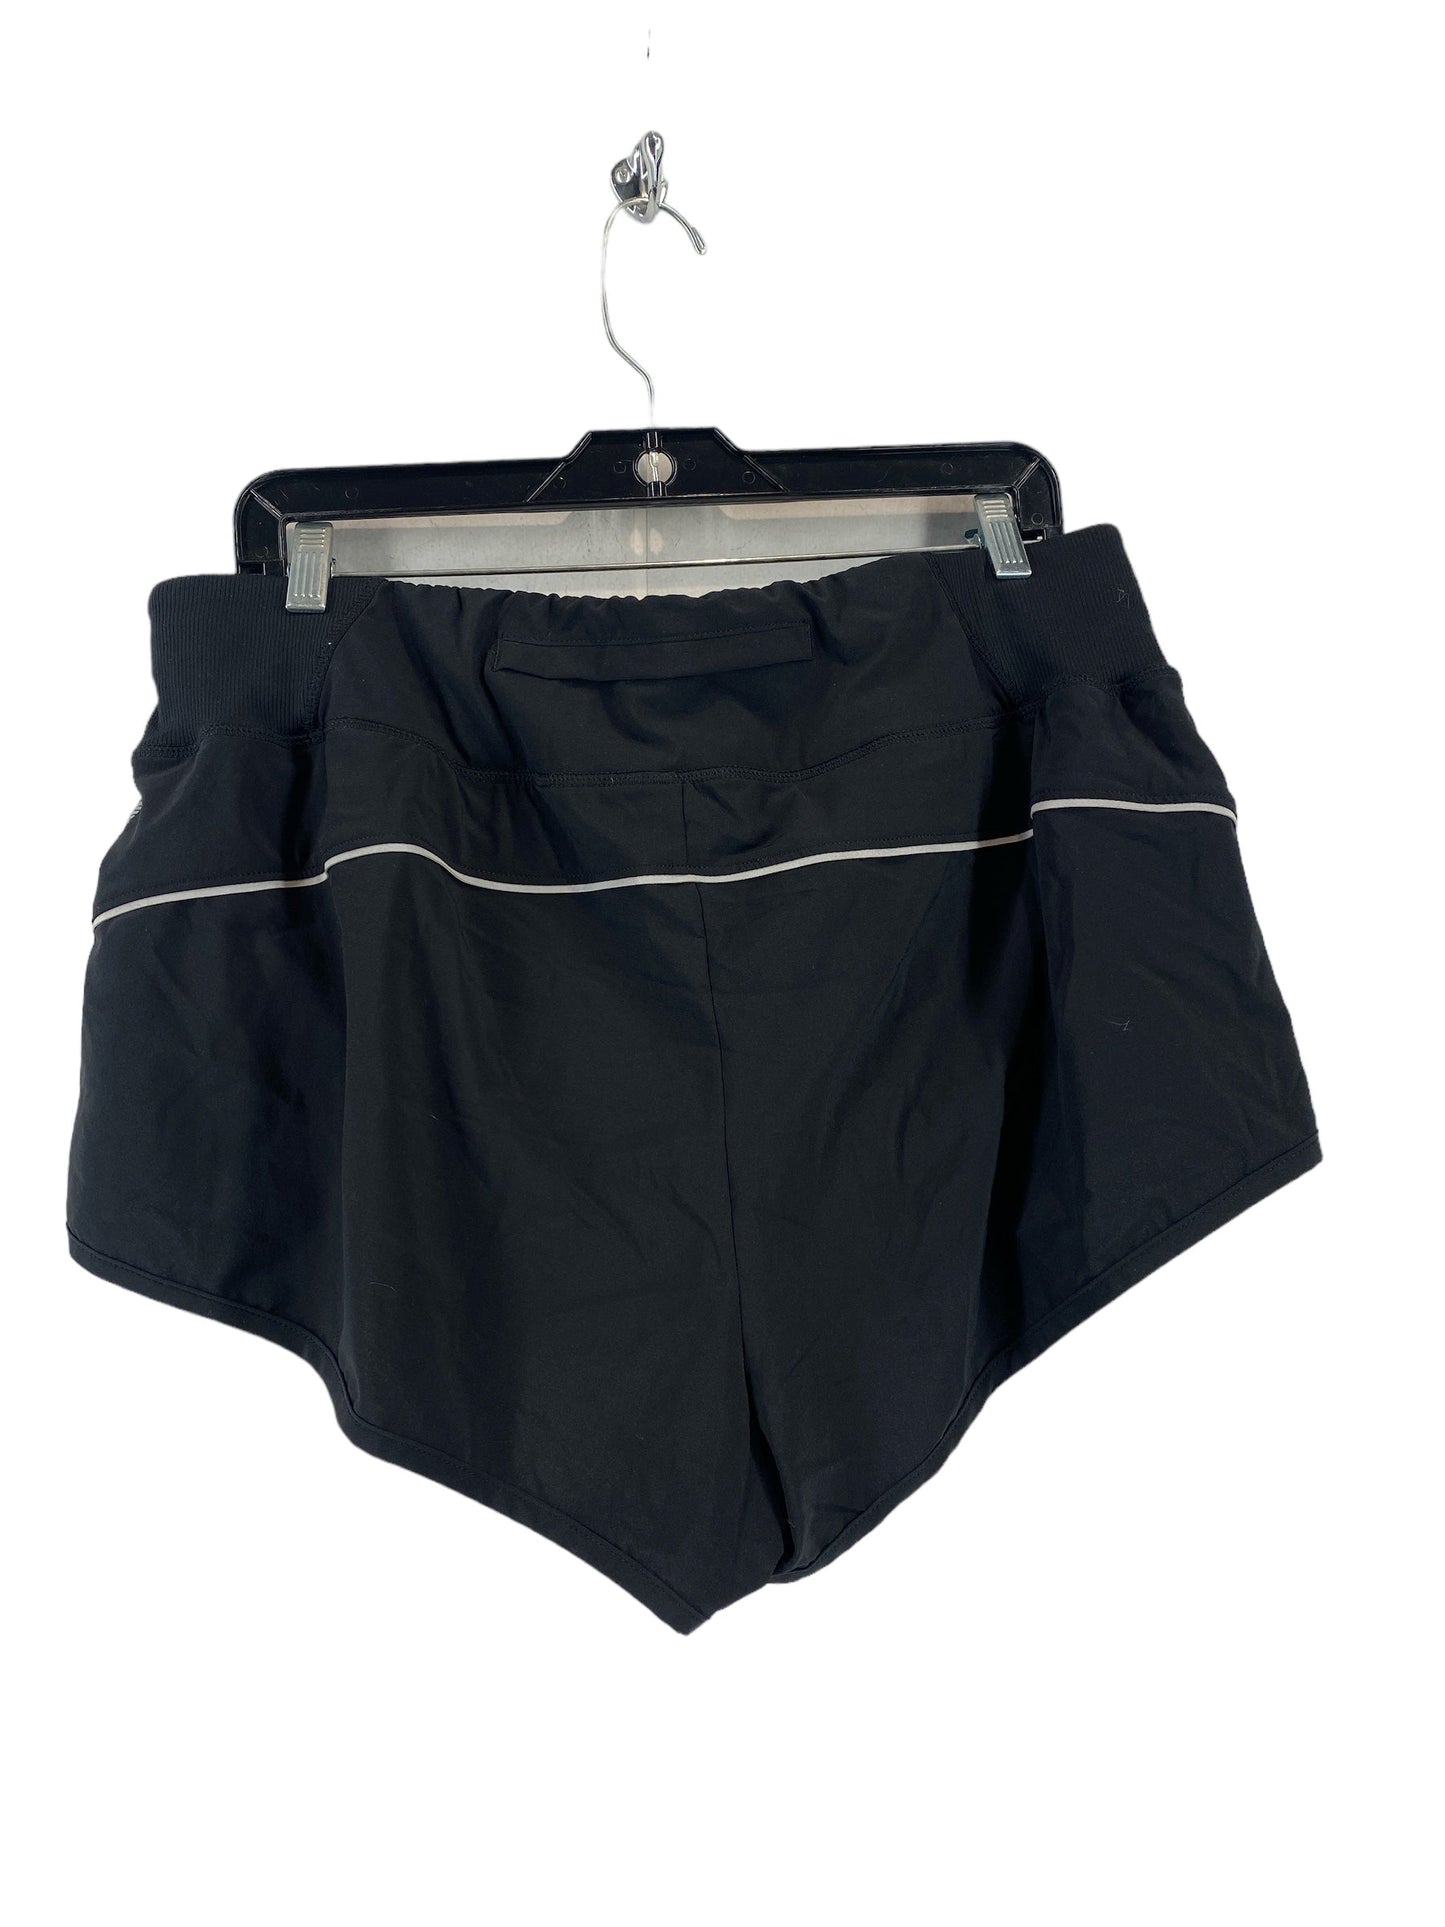 Athletic Shorts By Zella  Size: Xl